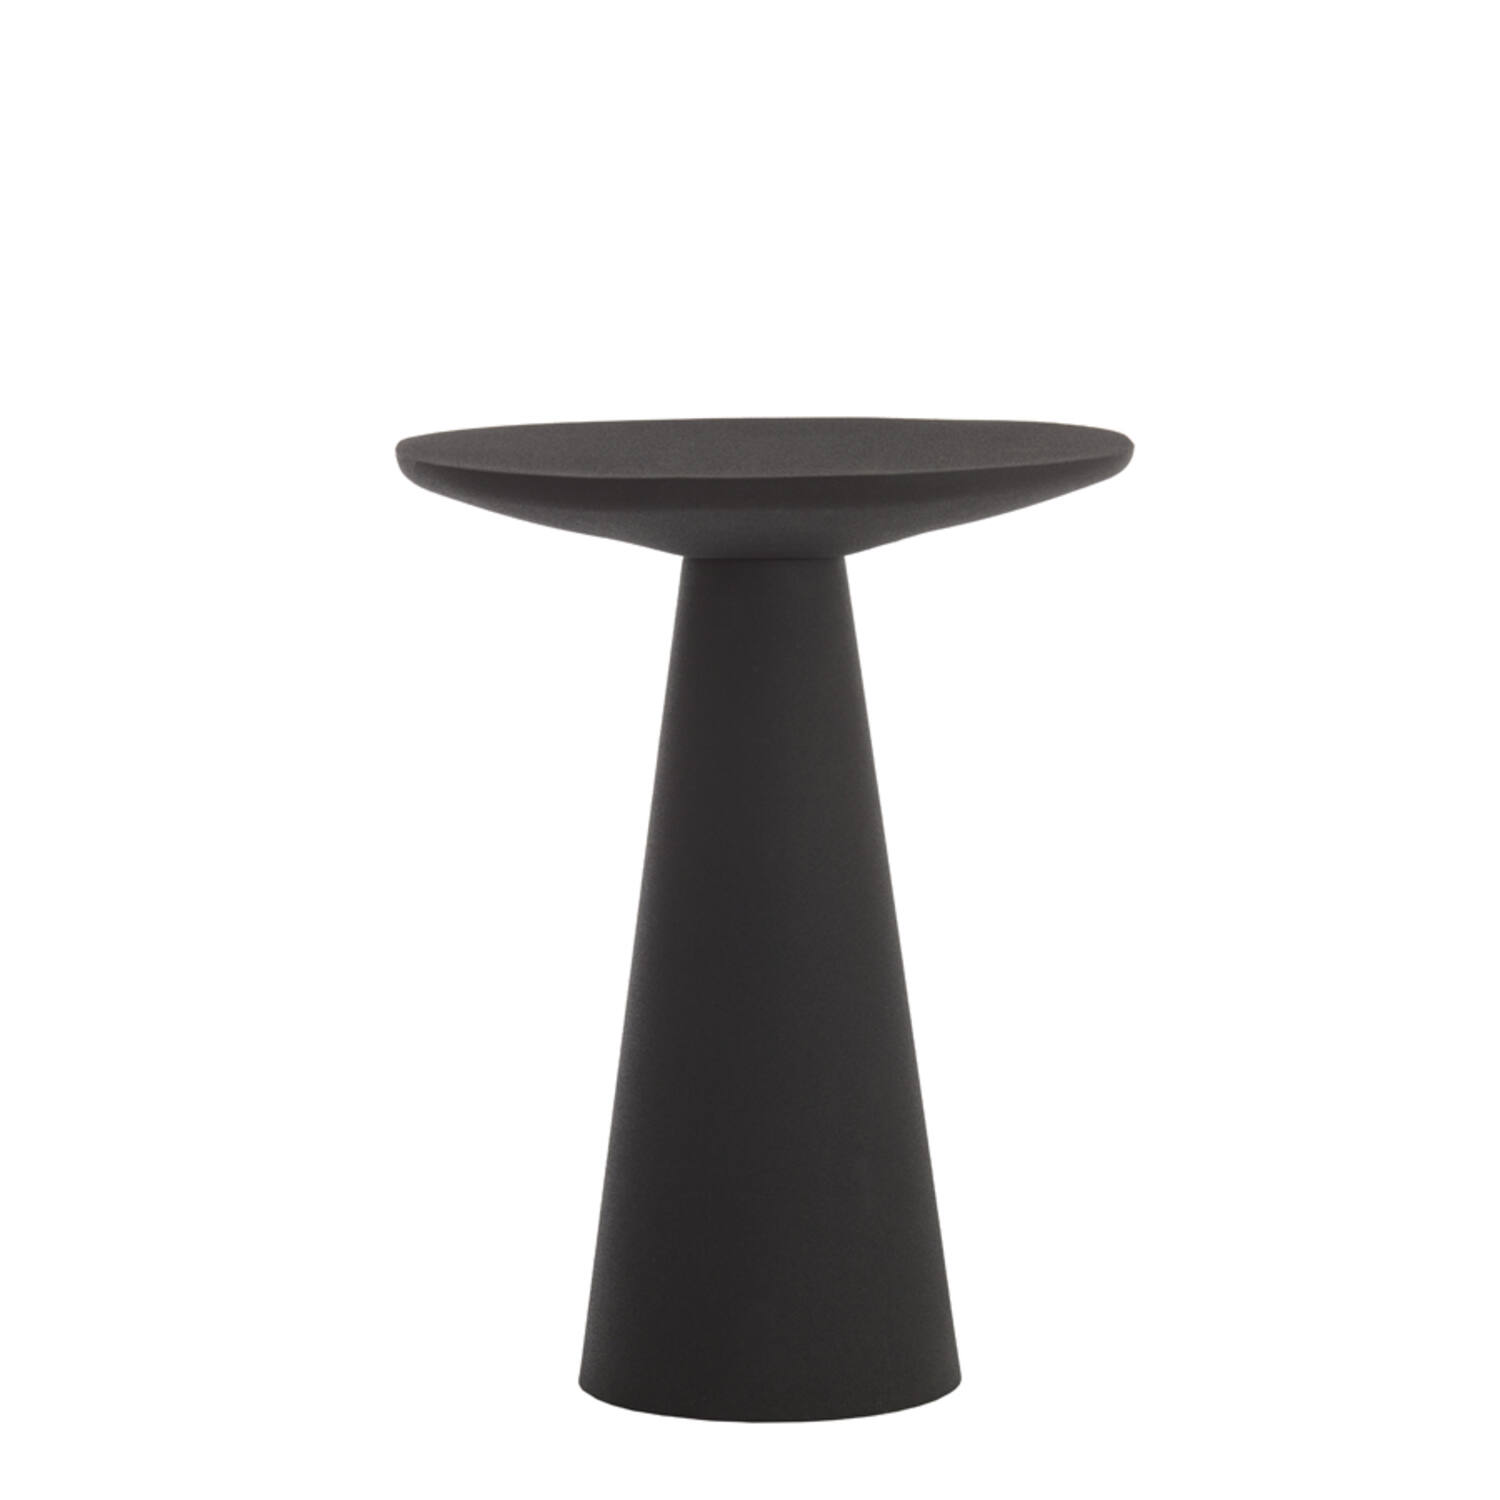 Side table 45x45x59 cm ABALA matt black